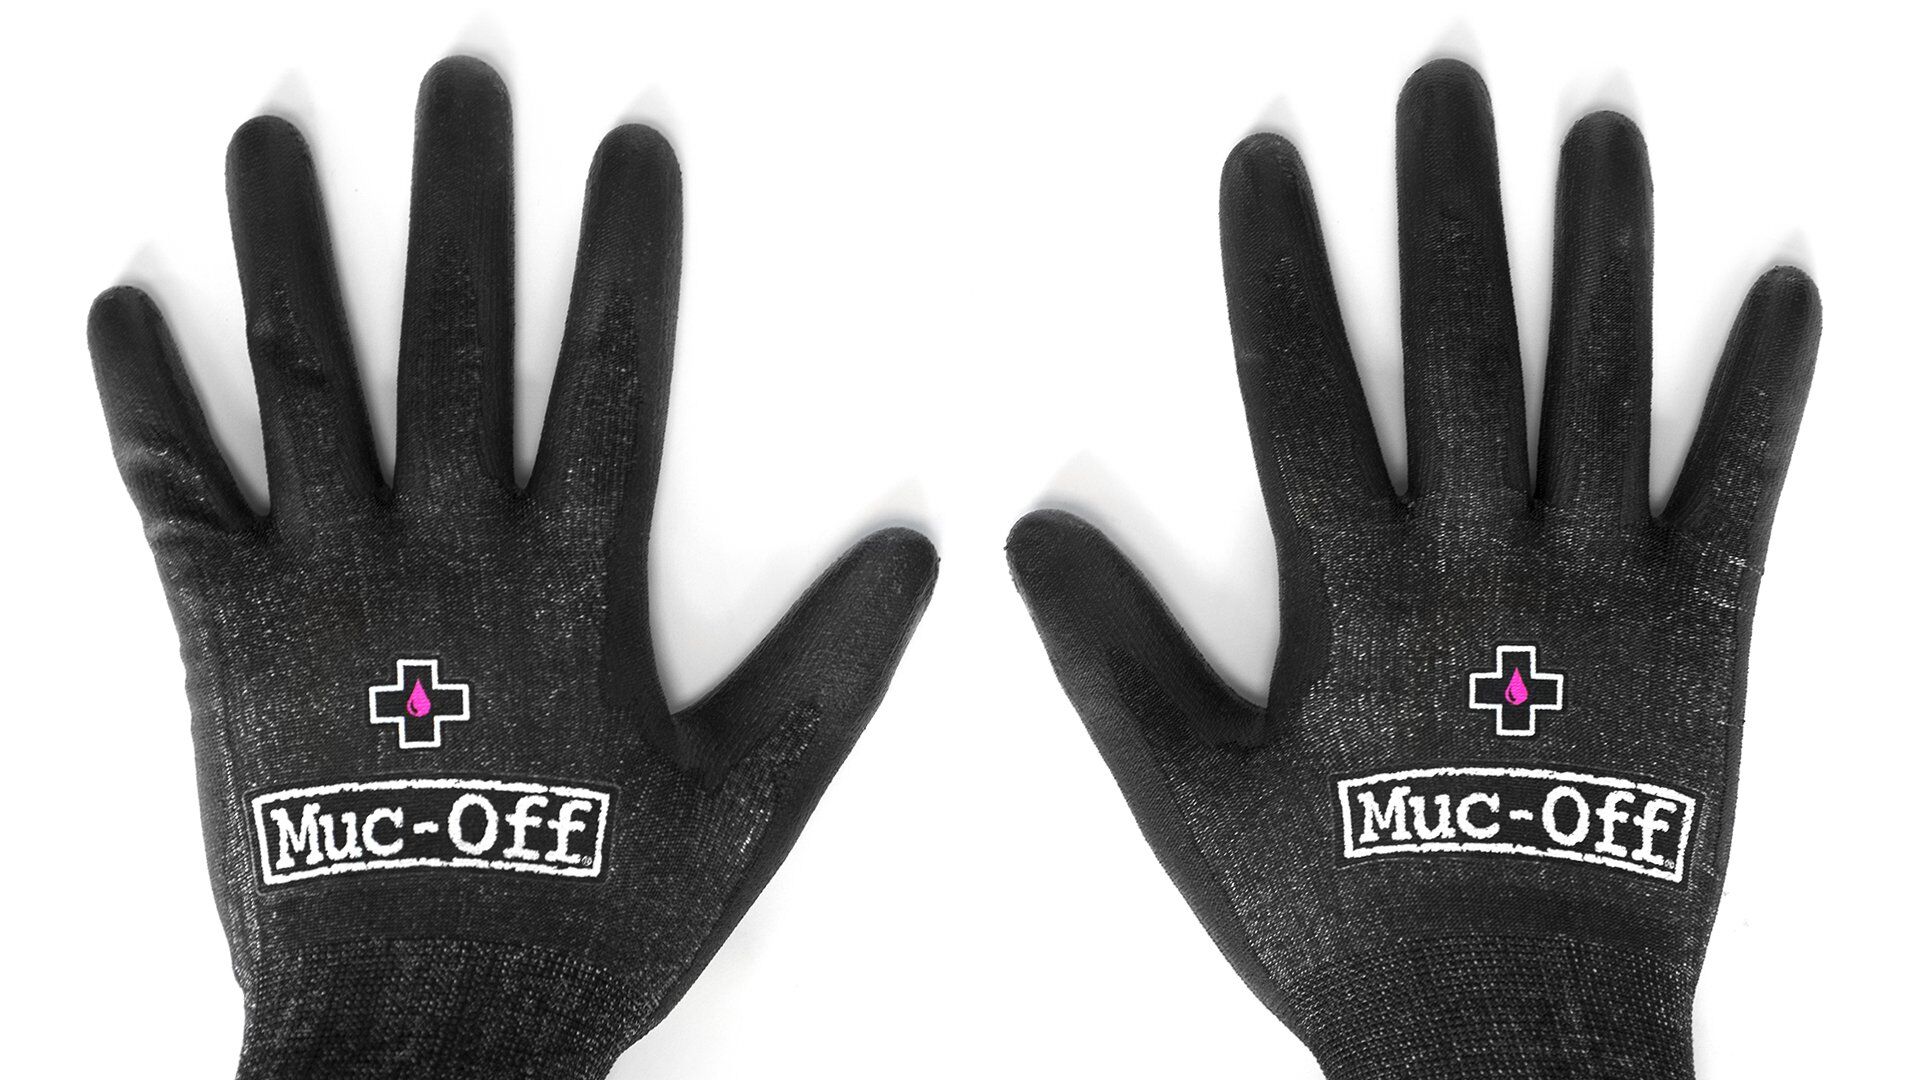 Muc-Off Mechanics Gloves - Guanti